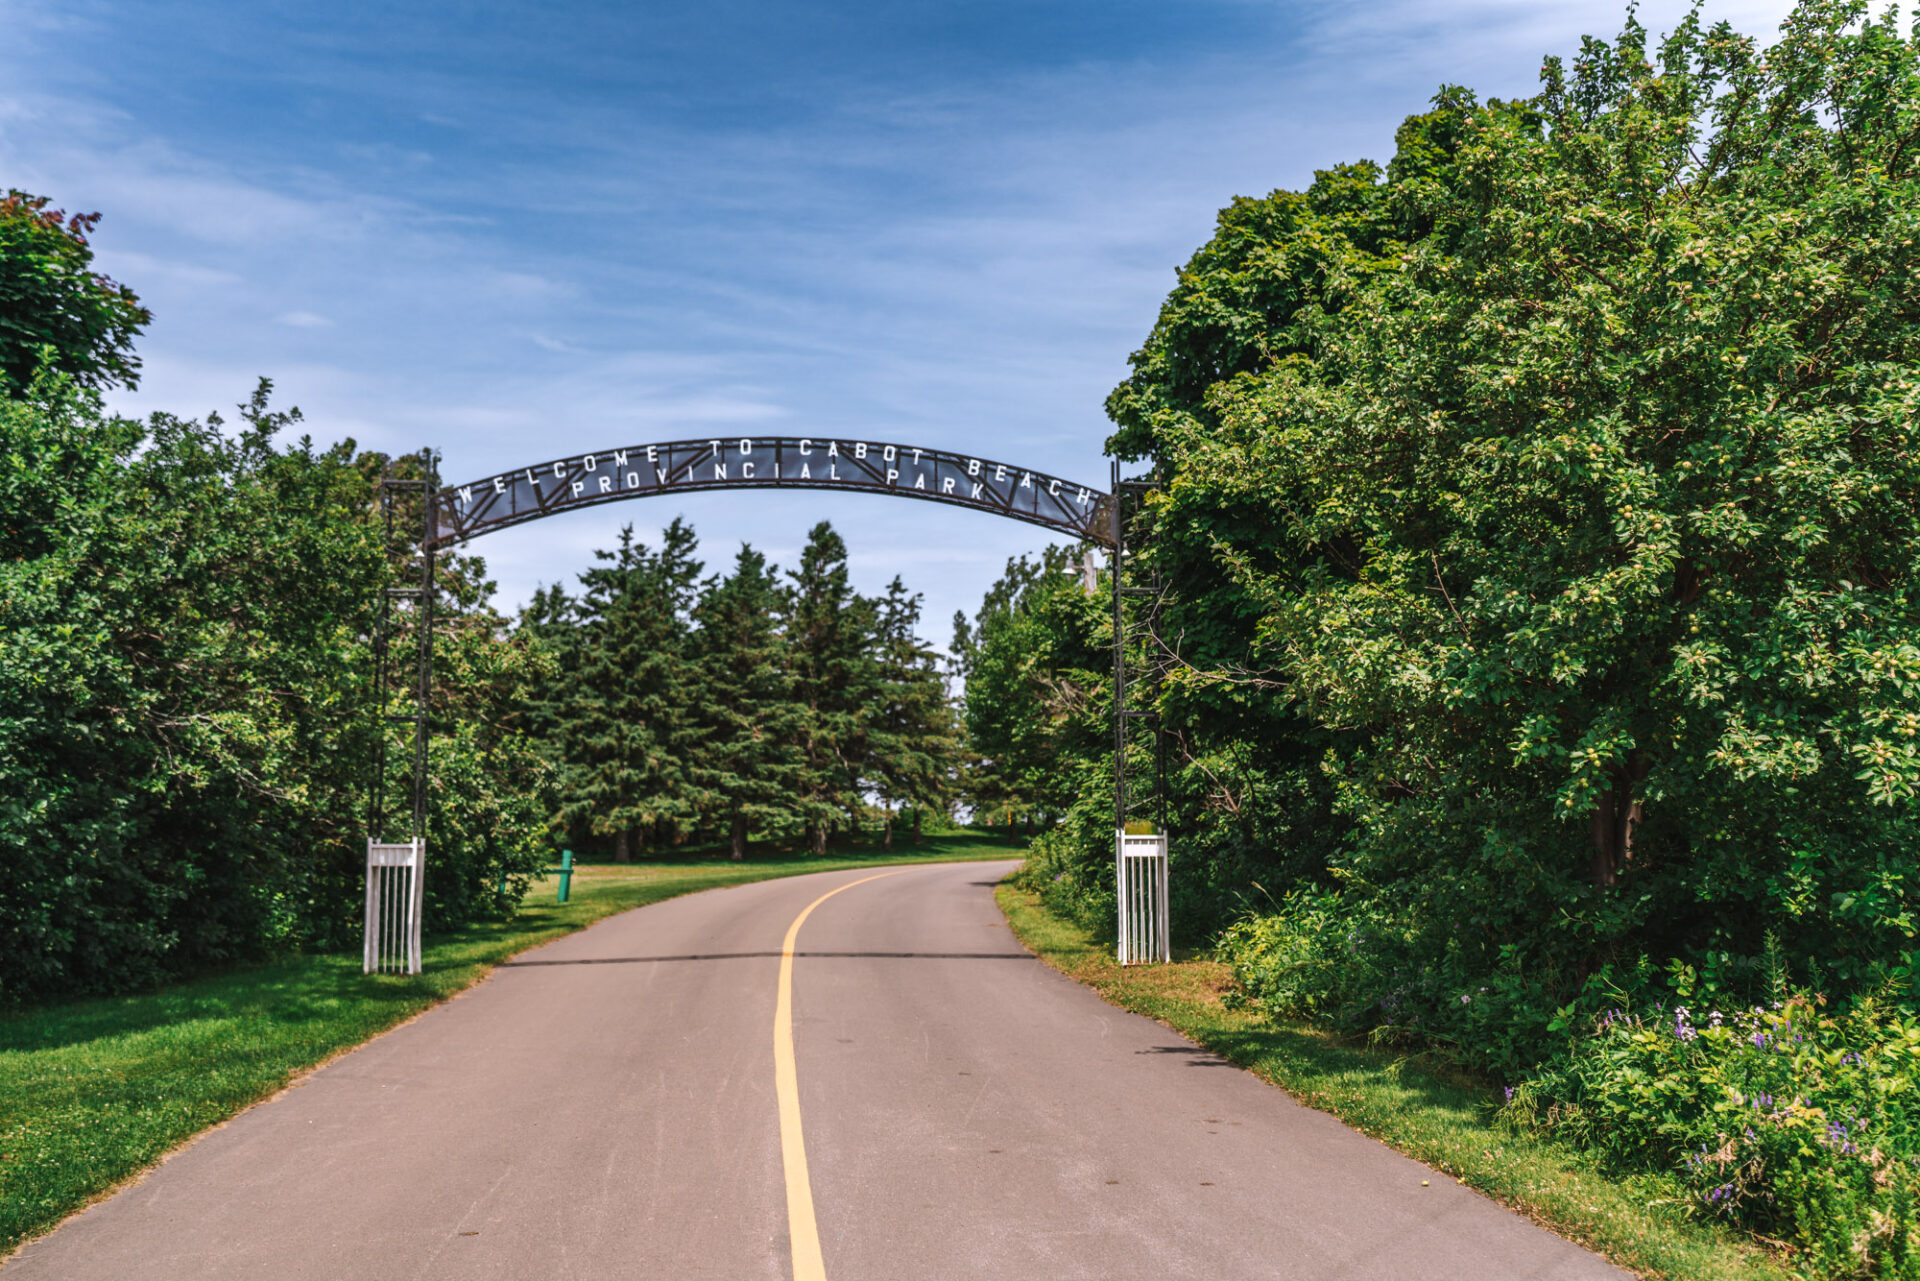 Entrance to Cabot Beach Provincial Park